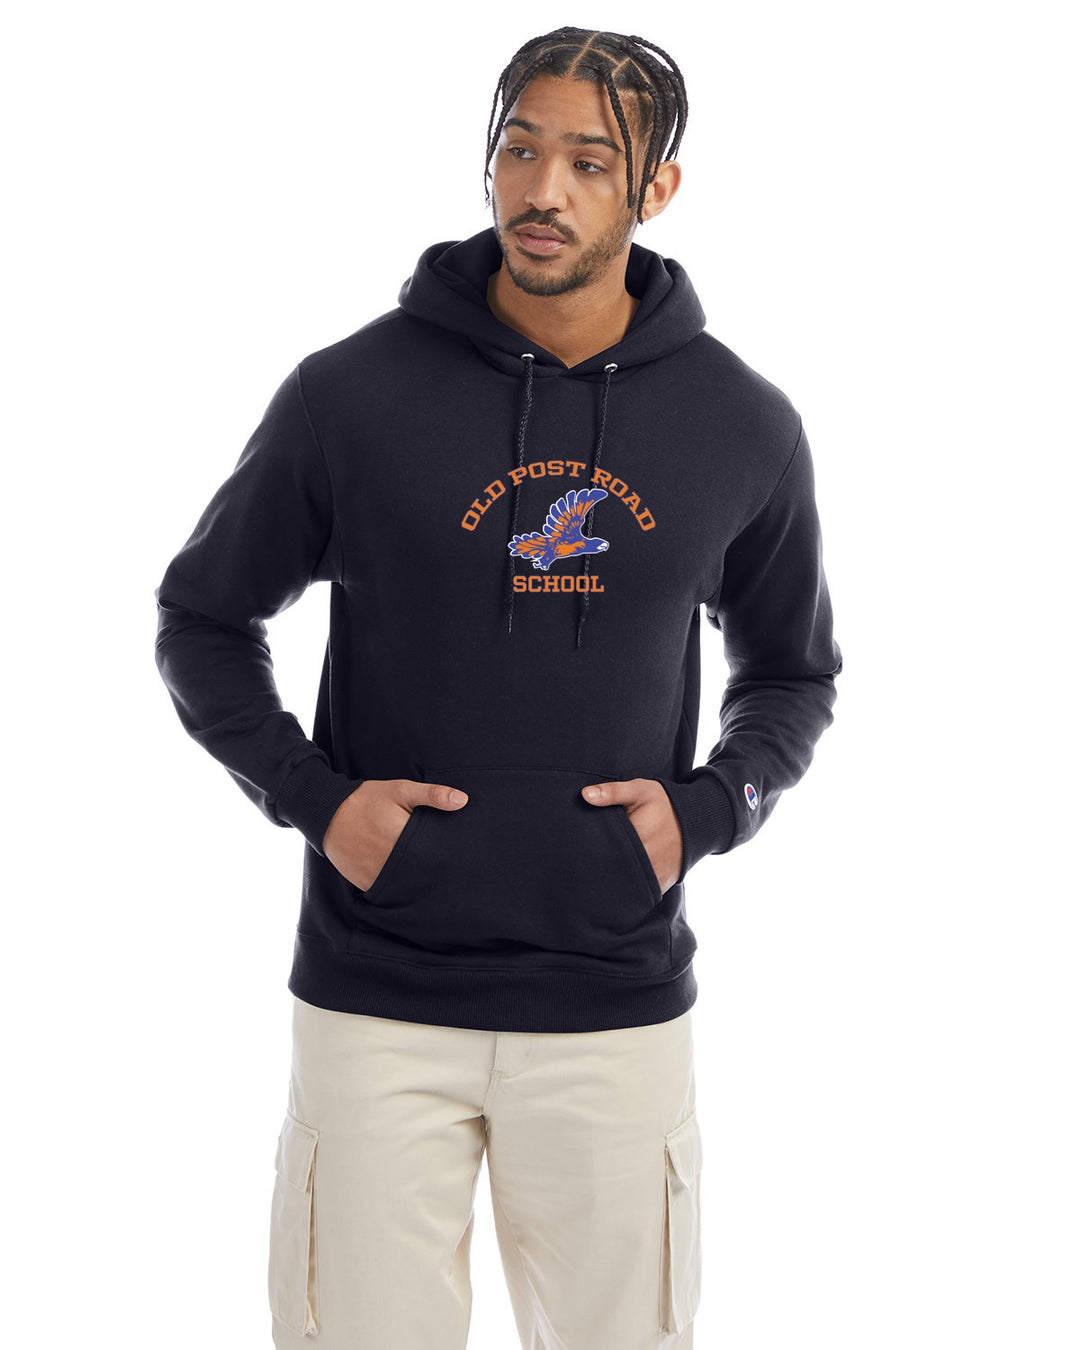 Old Post Road School - Champion Adult Powerblend® Pullover Hooded Sweatshirt (S700)